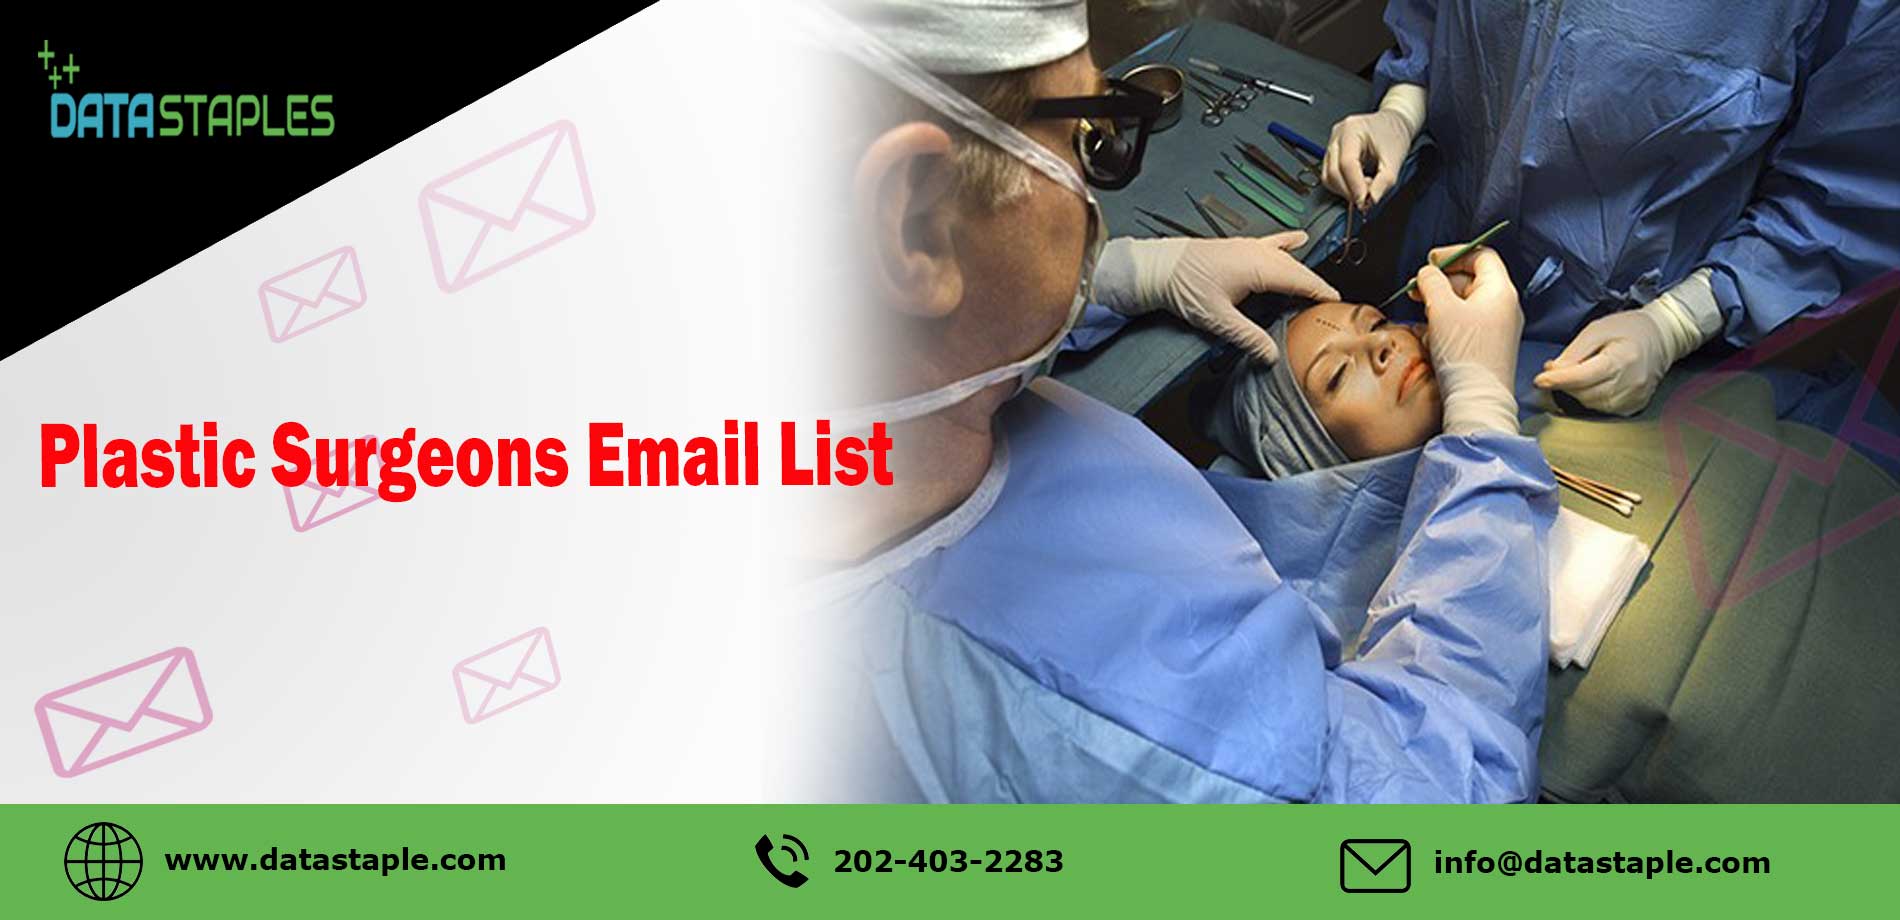 Plastic Surgeons Email List | DataStaples